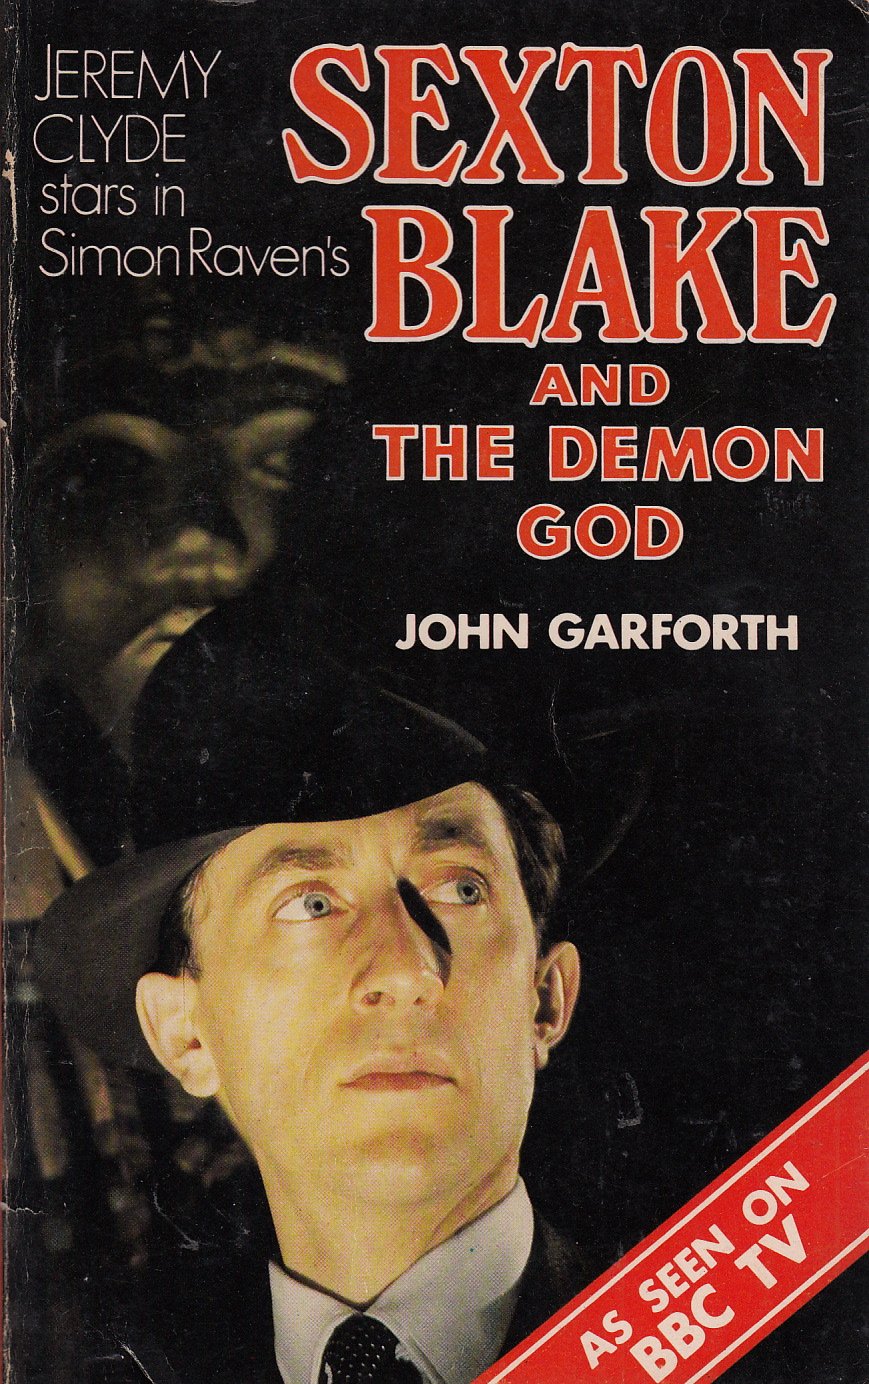 Sexton Blake and the Demon God